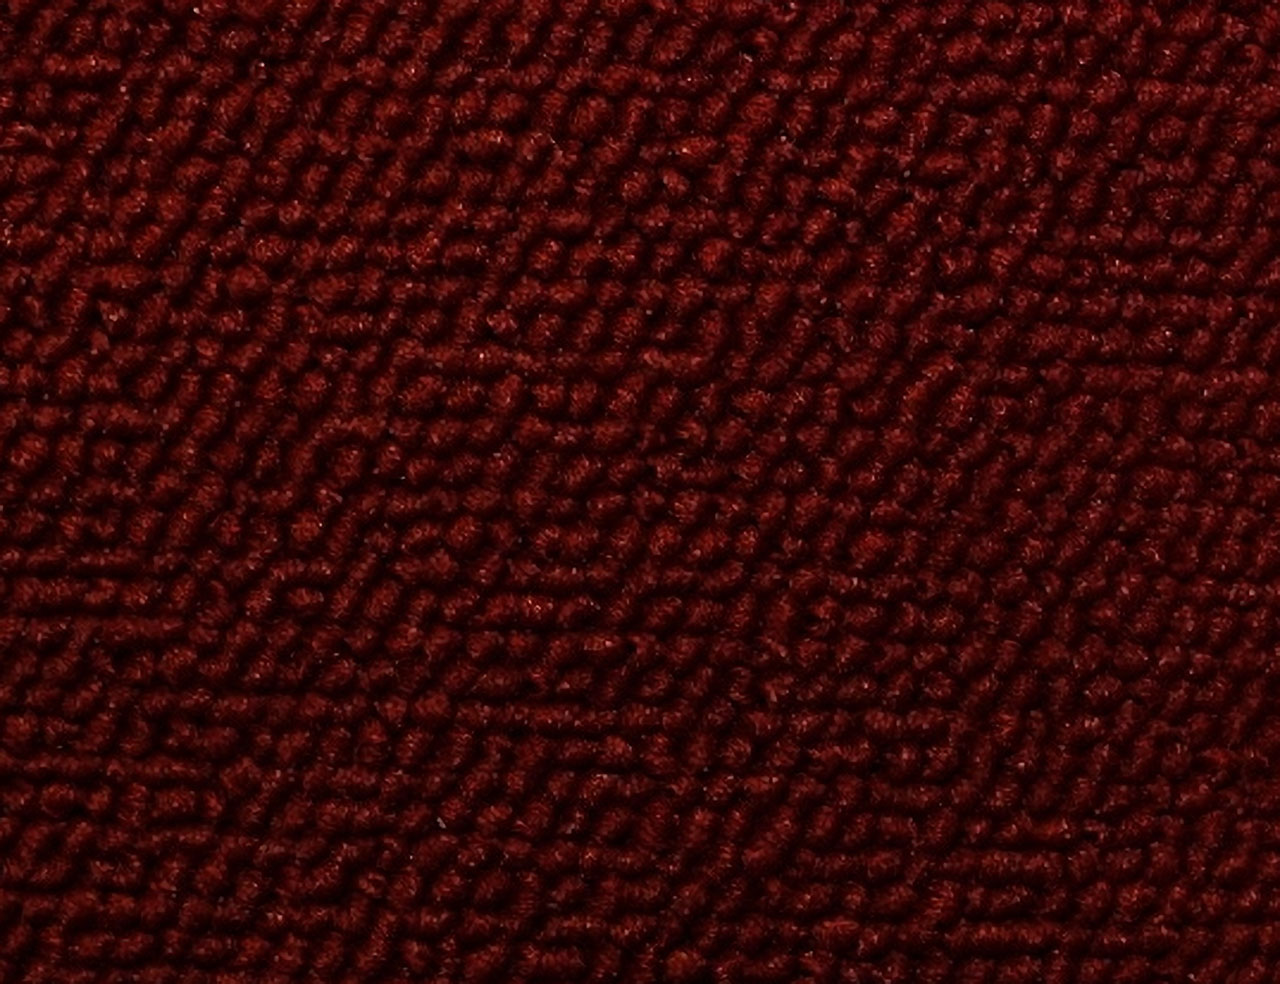 Holden Standard EJ Standard Sedan A93 Bolero Red Carpet (Image 1 of 1)